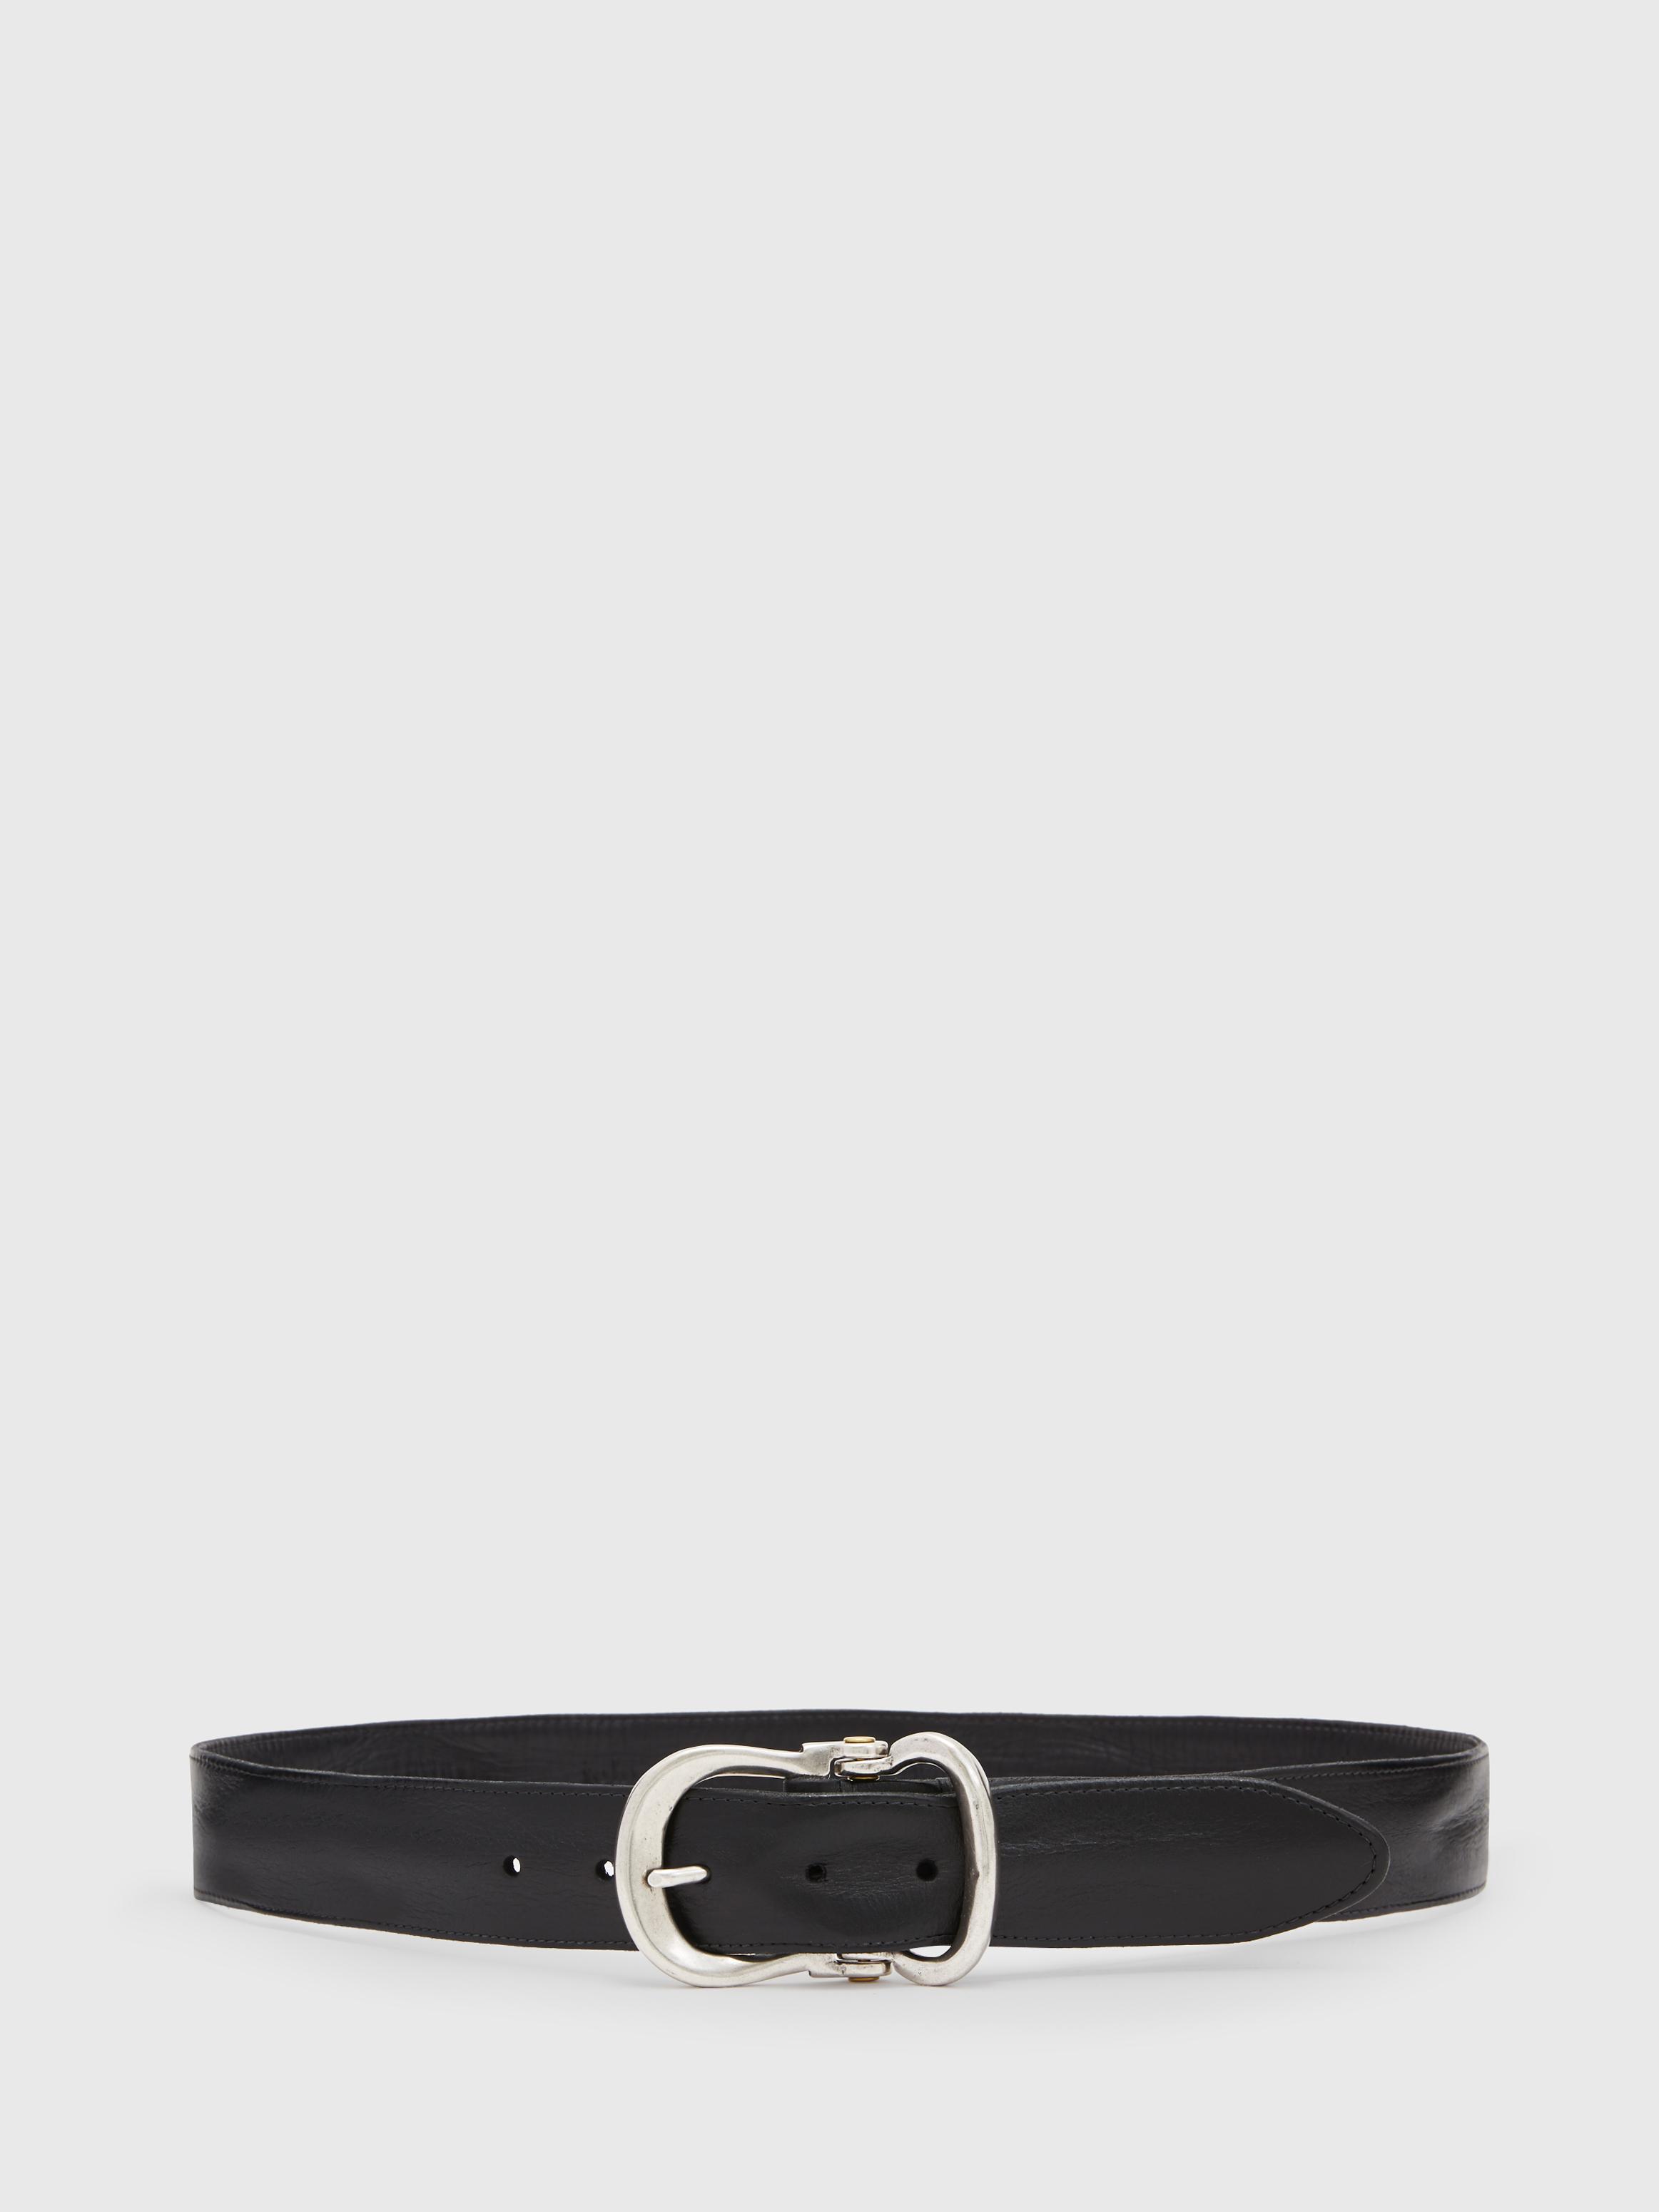 Men's Luxury Belts | Leather & Suede Belts | John Varvatos